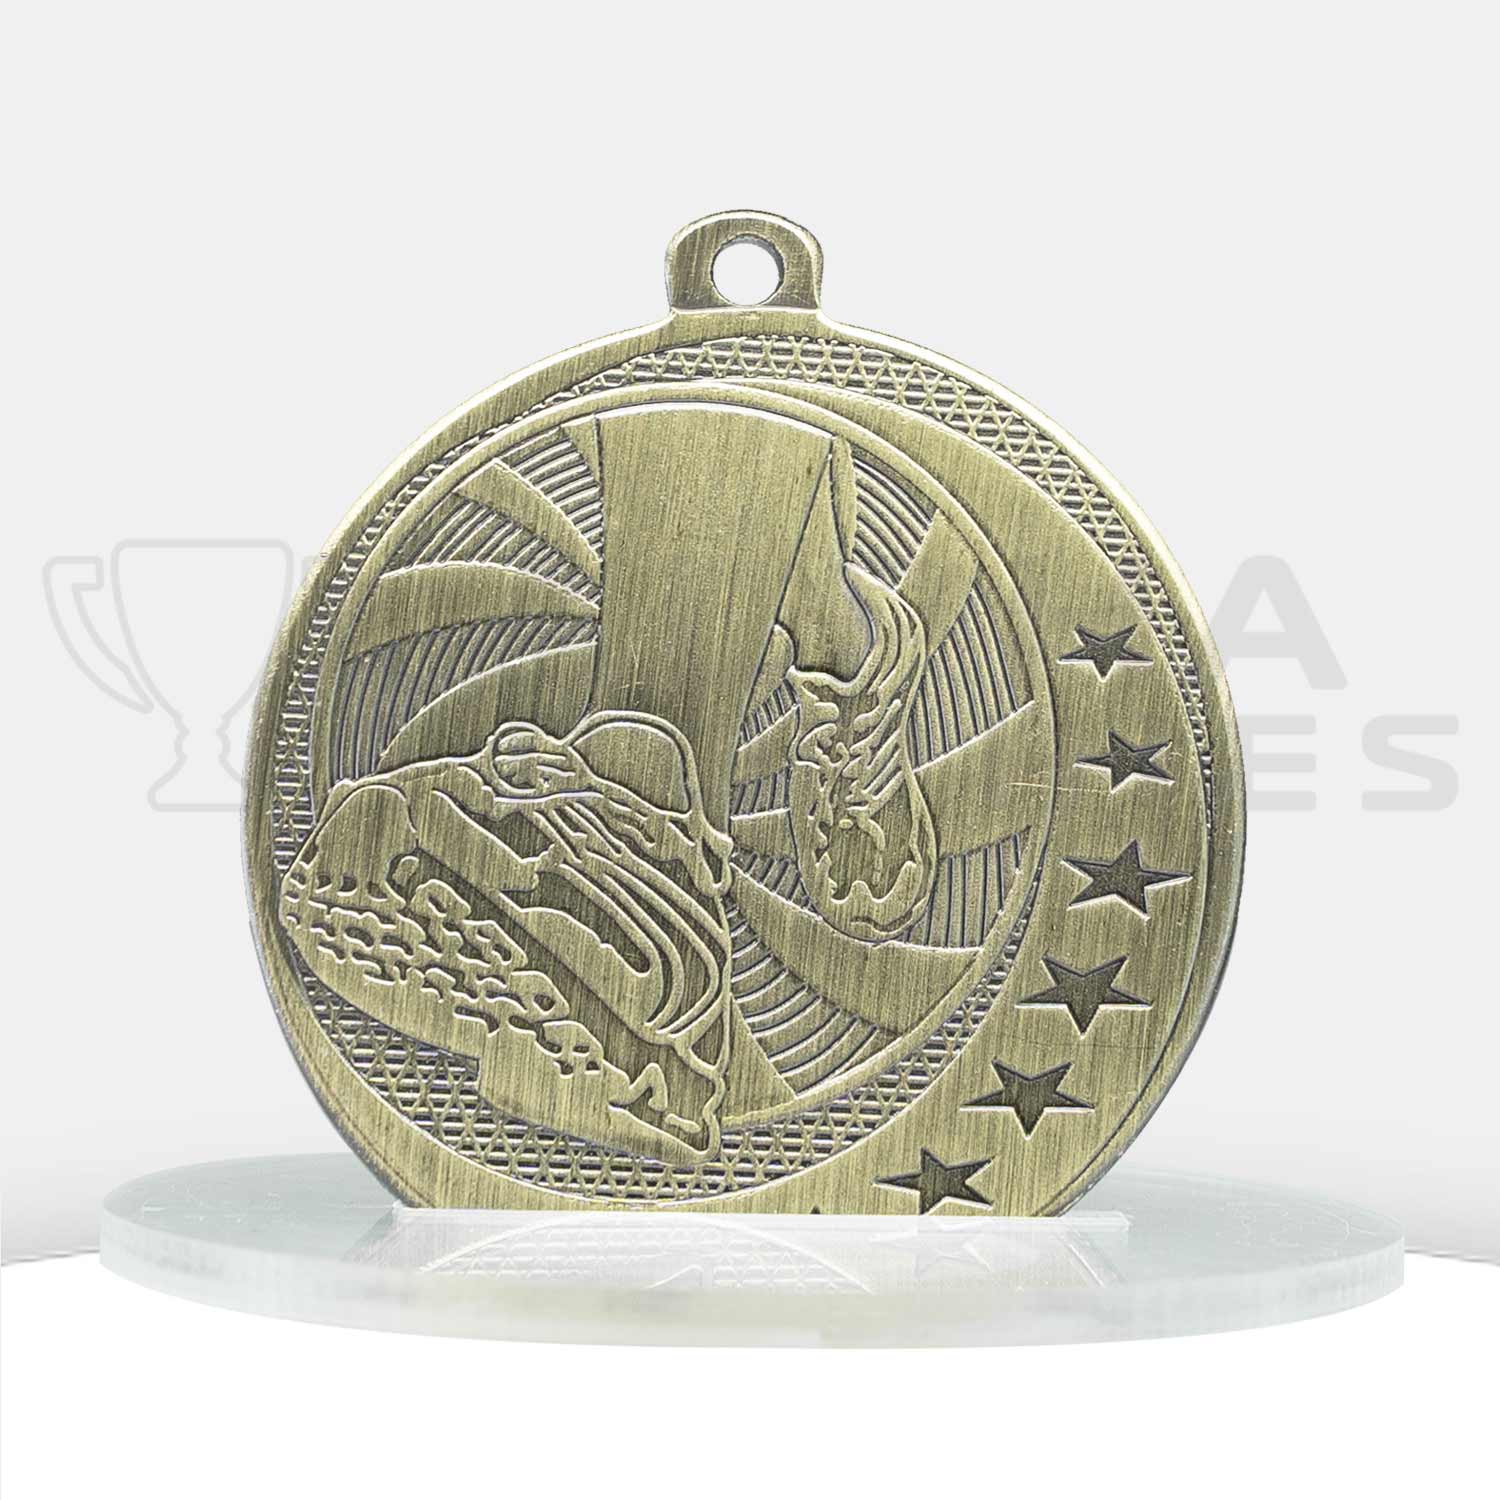 running-wayfare-medal-gold-front